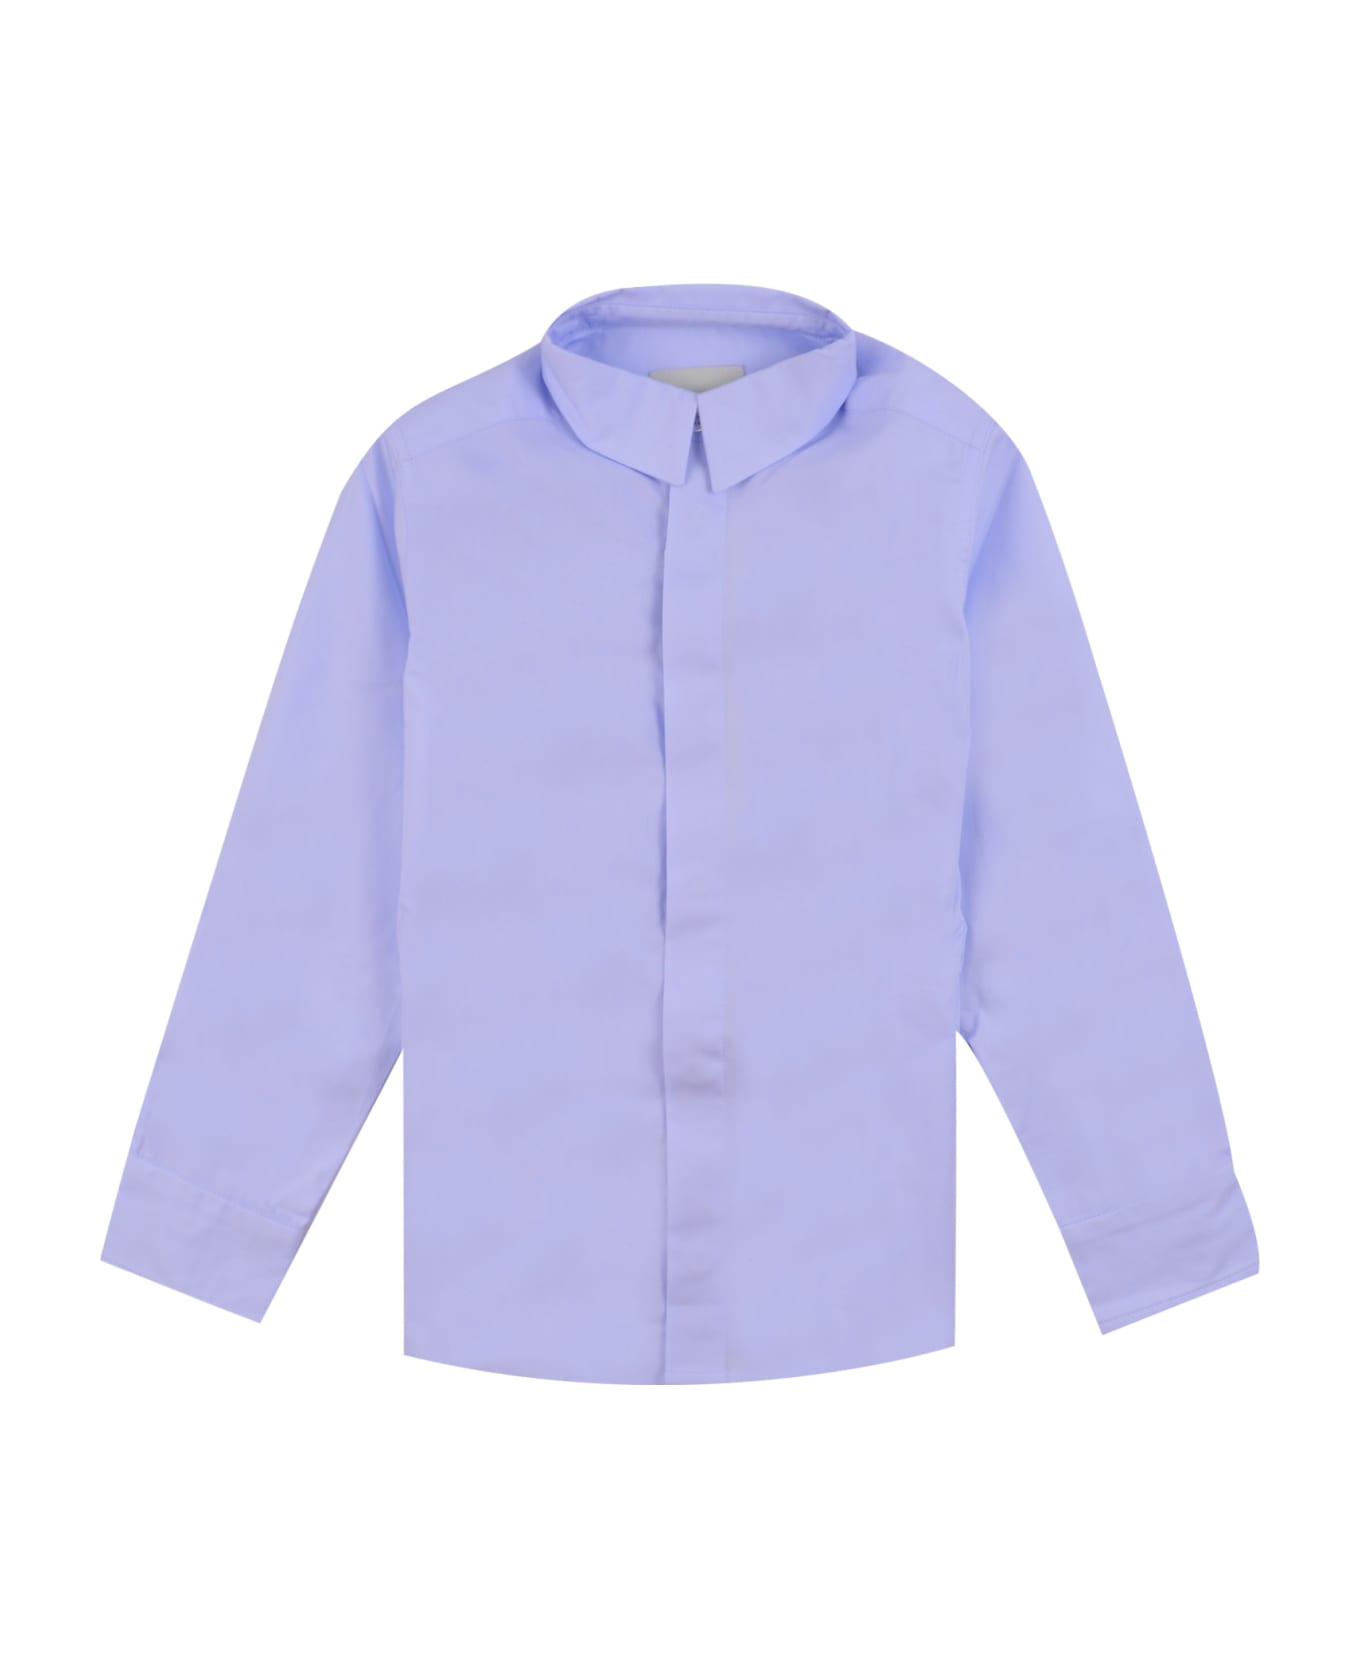 Fendi Cotton Shirt - Light blue シャツ